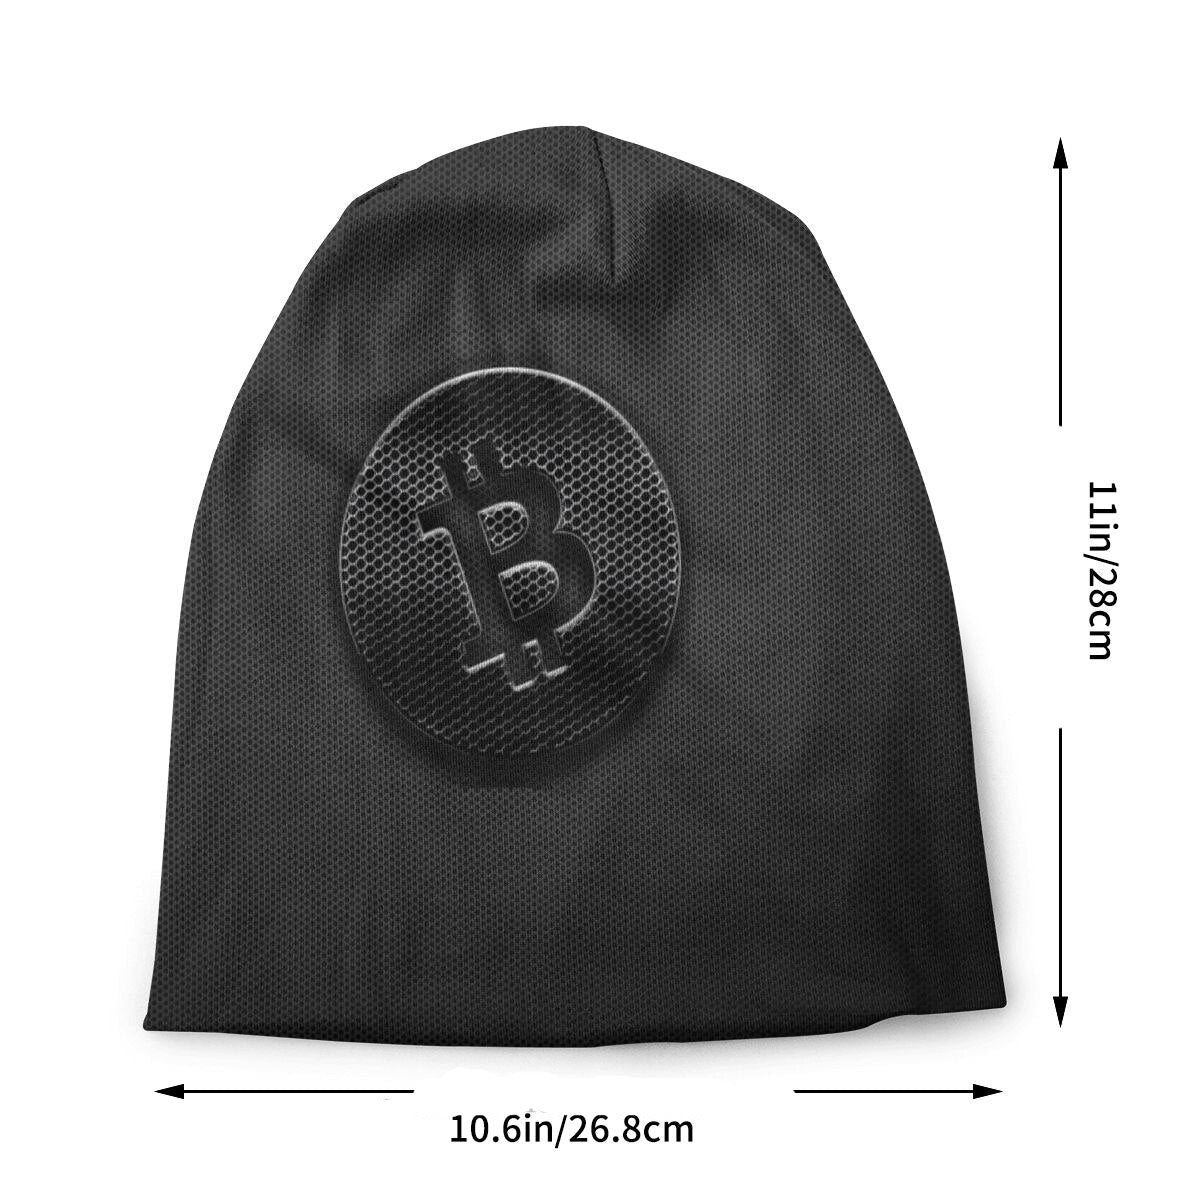 Bitcoin themed hat